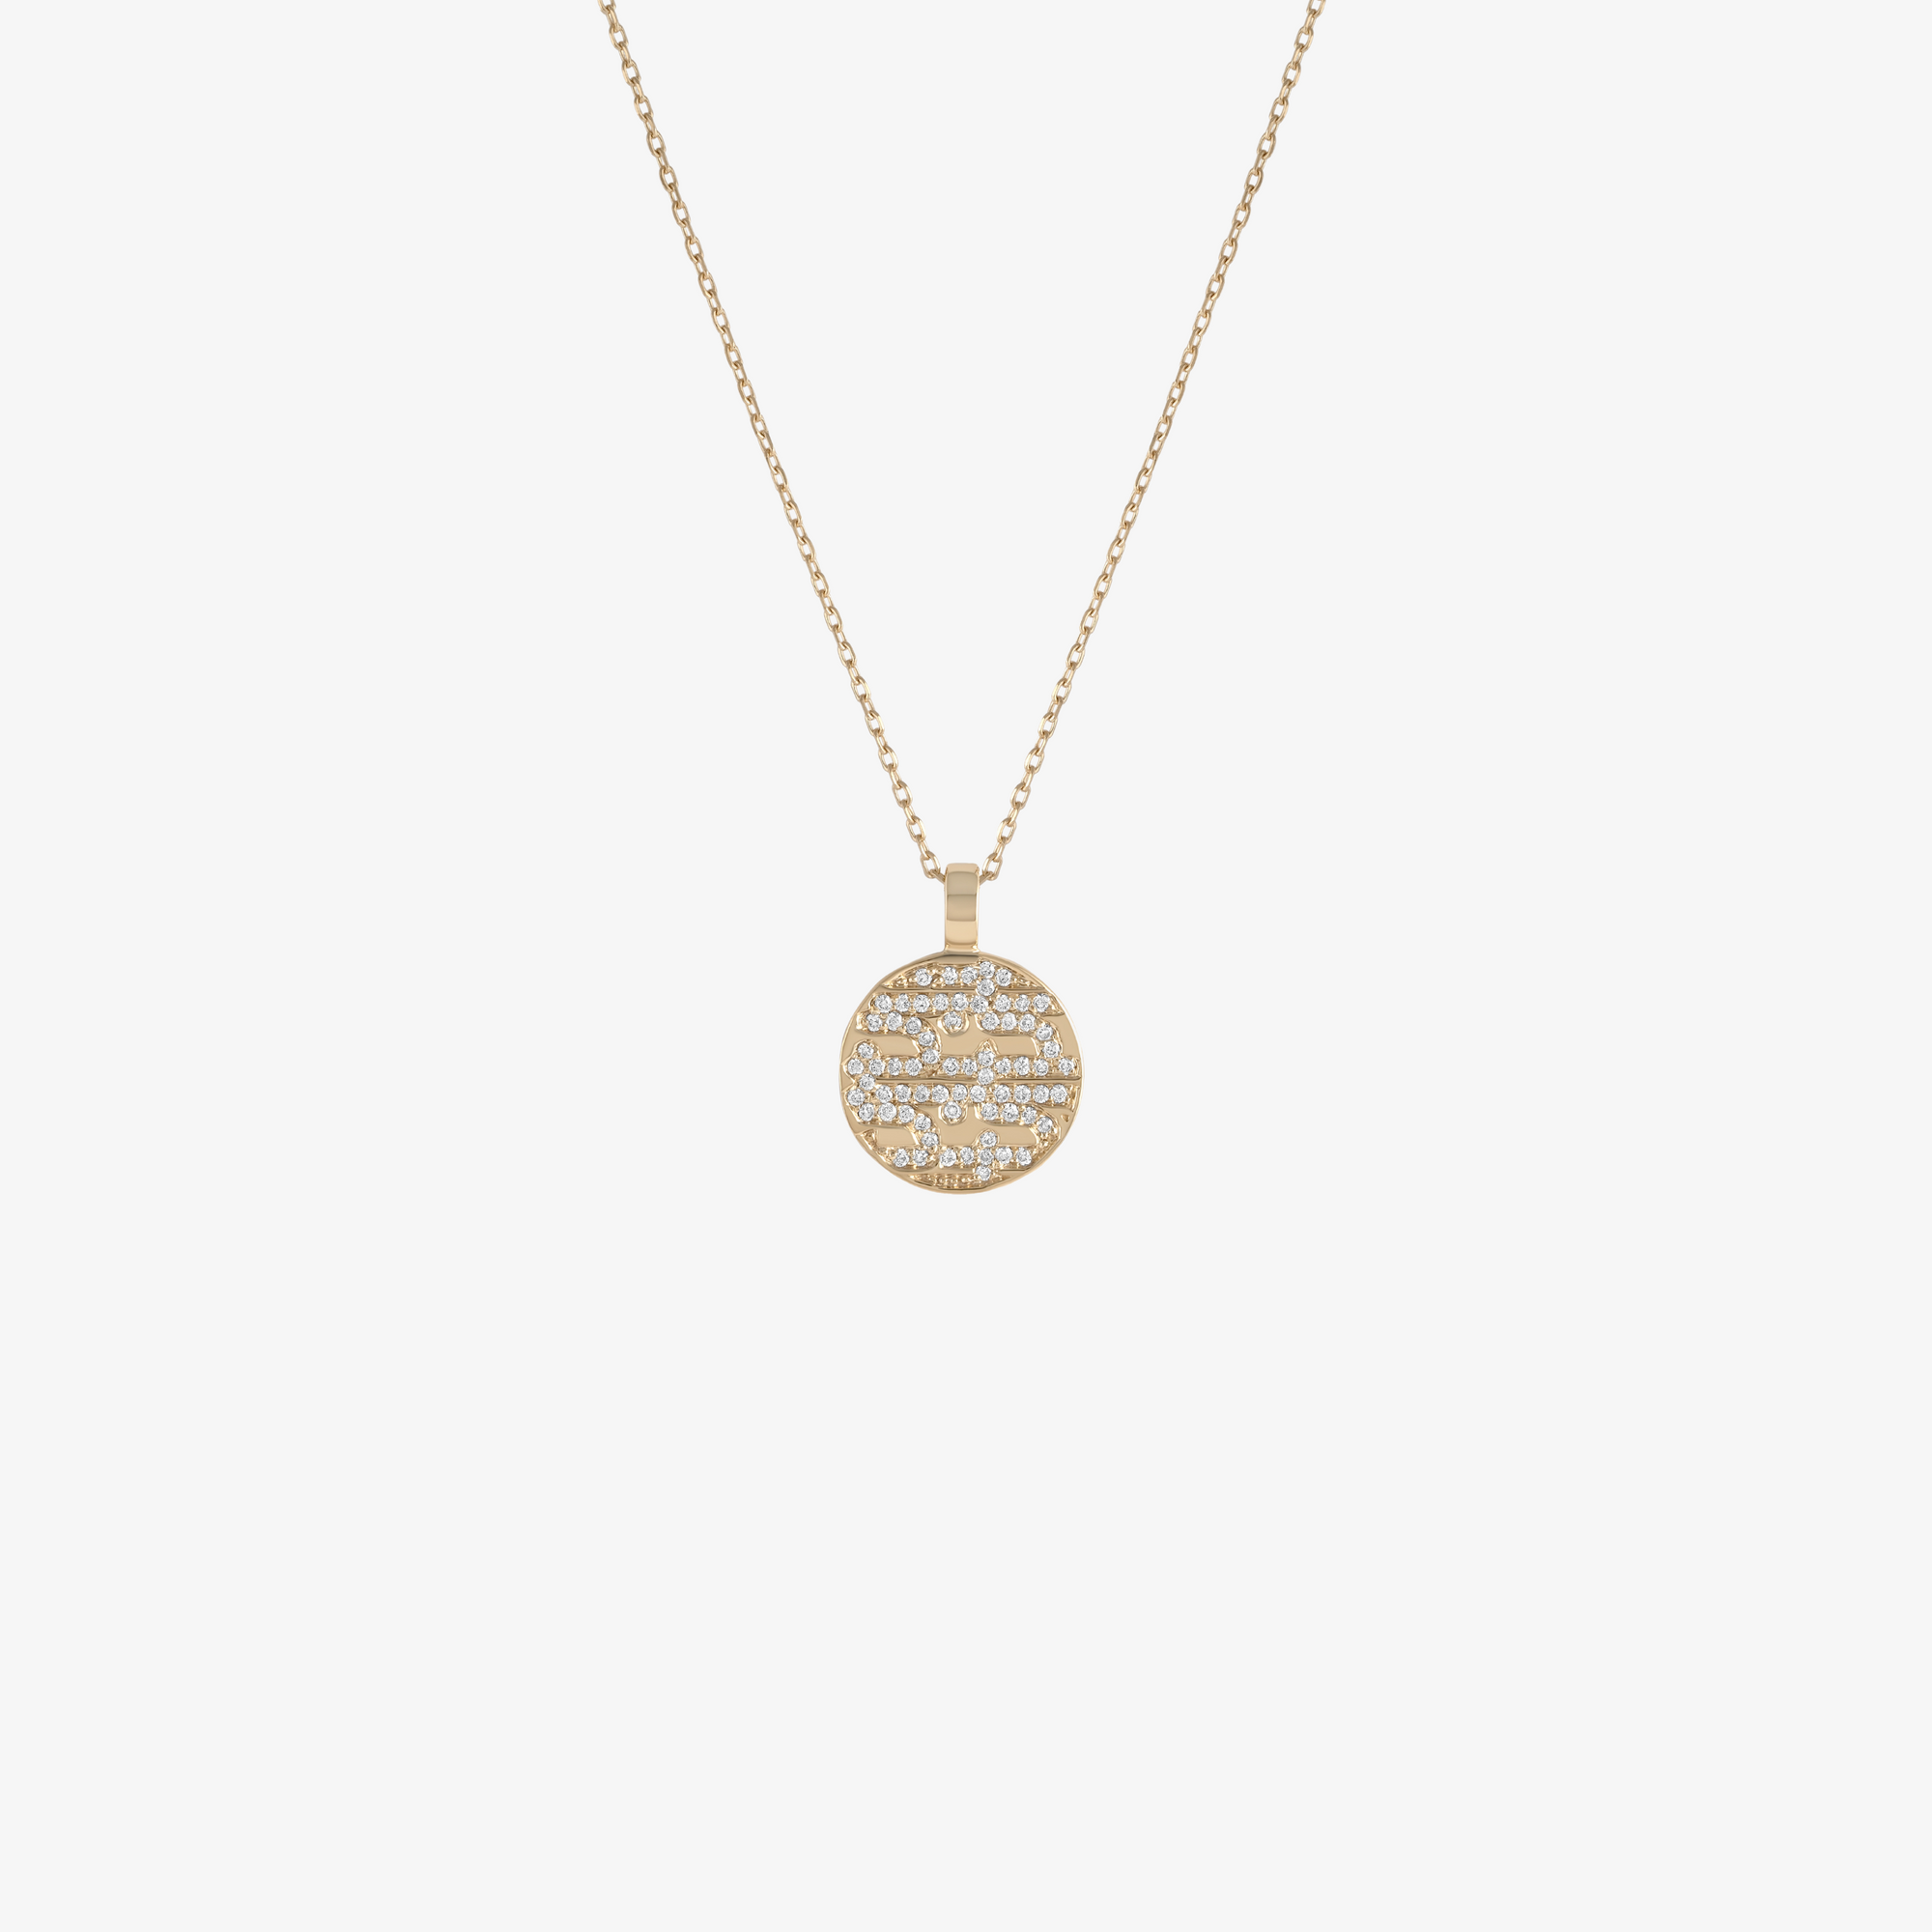 NASJ - 18K Gold & Diamond "Love" Necklace